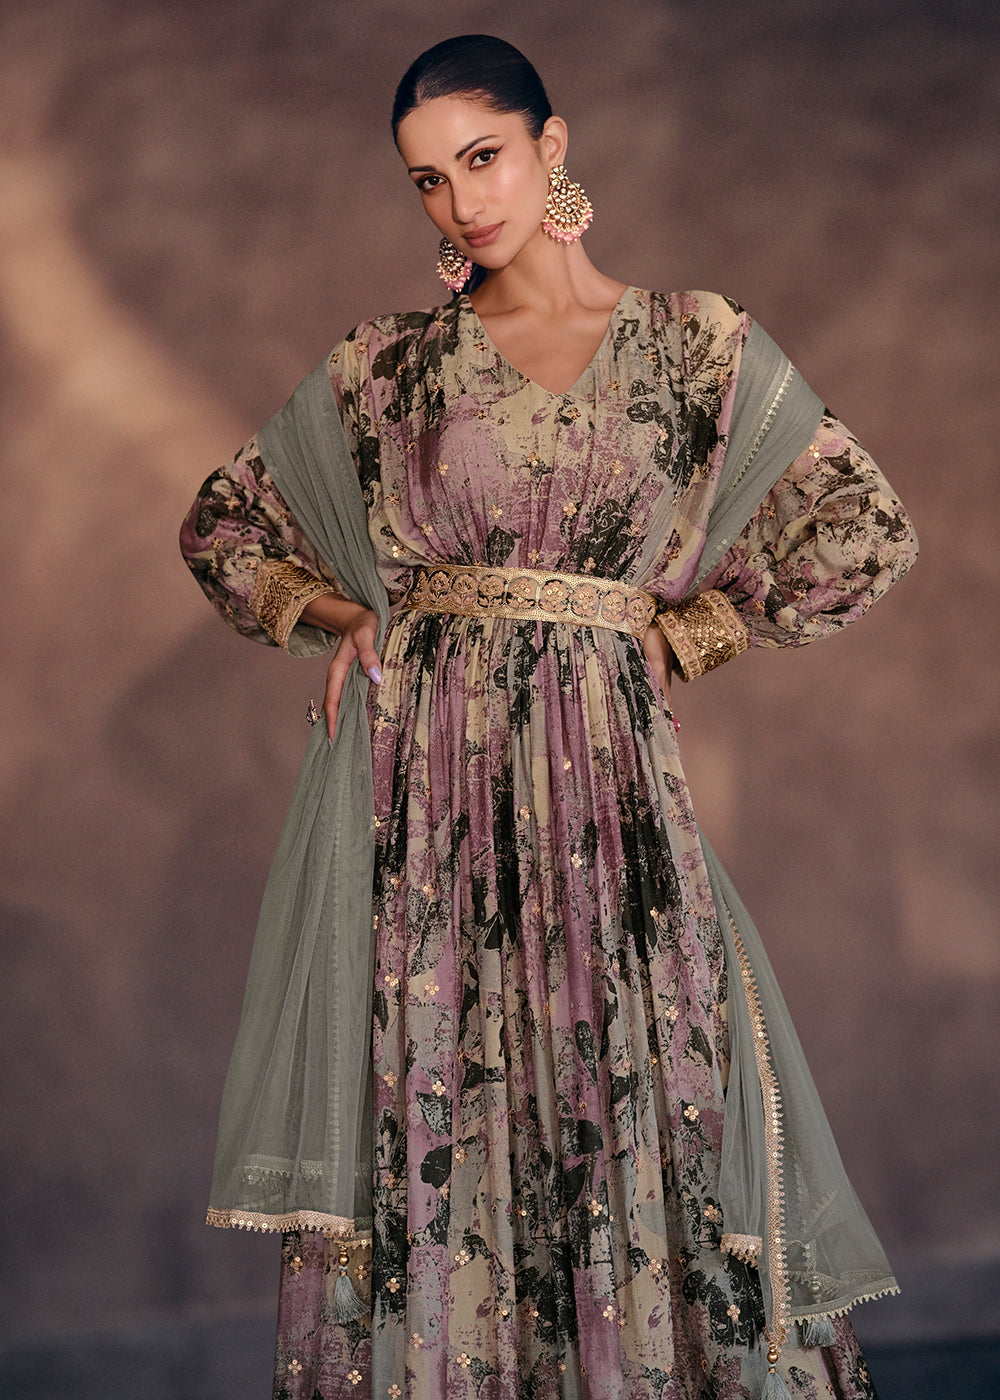 Buy Now Lavender Multicolor Digital Printed Designer Anarkali Gown Online in USA, UK, Australia, New Zealand, Canada & Worldwide at Empress Clothing.